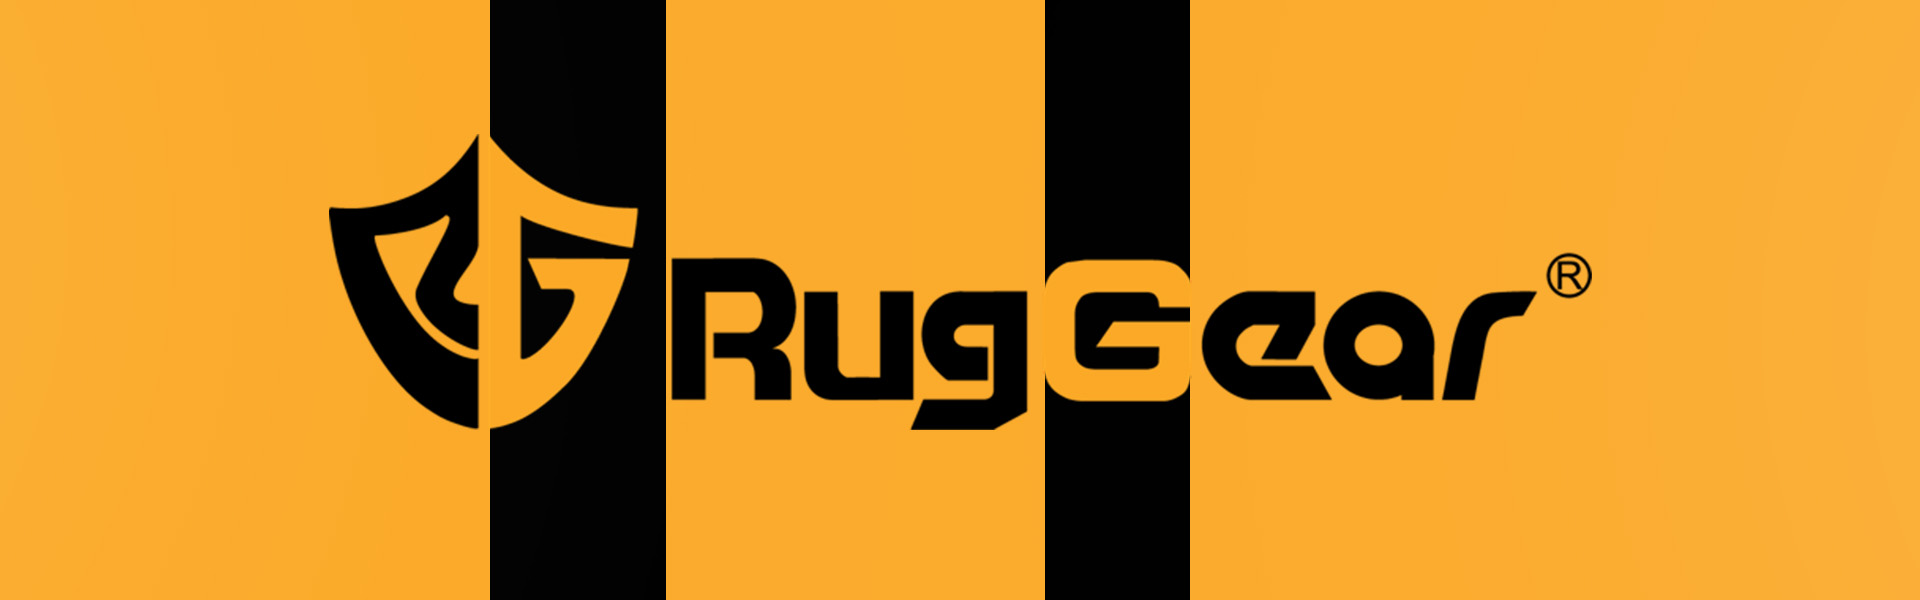 RugGear RG740, Dual SIM, Black/Yellow 